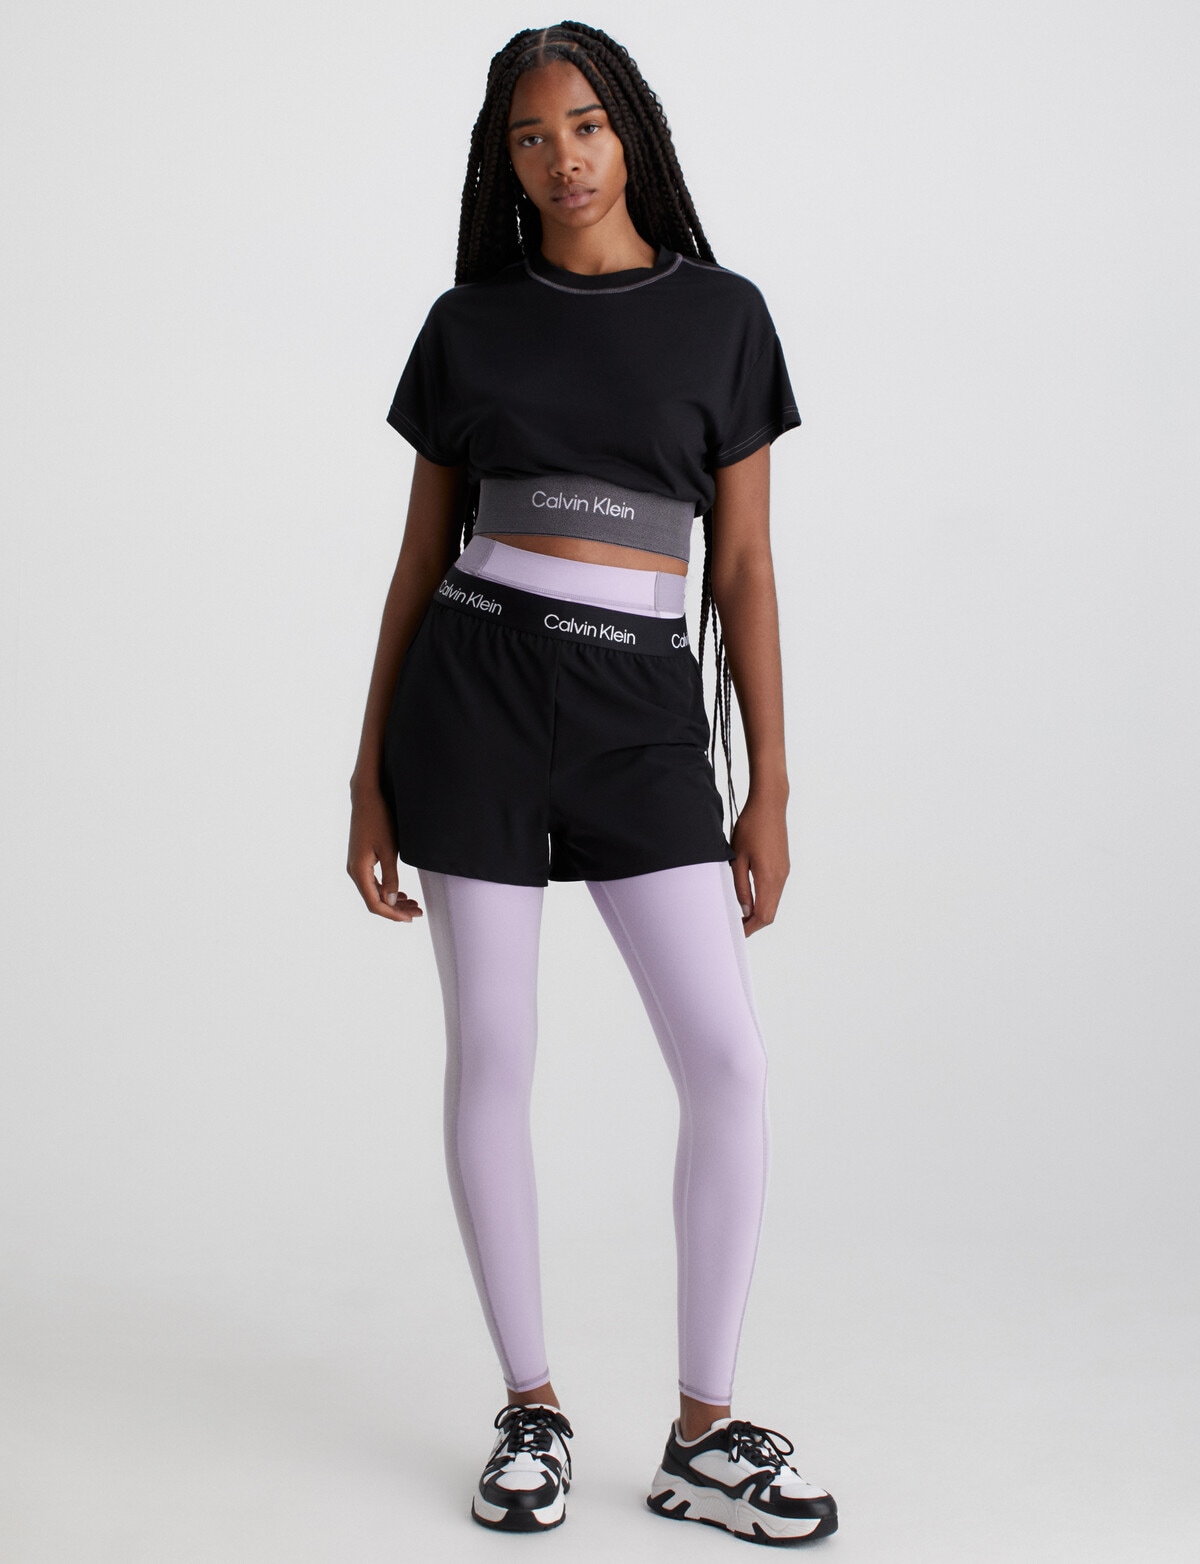 Calvin Klein Short Sleeve Tee with Band, Black Beauty - Activewear